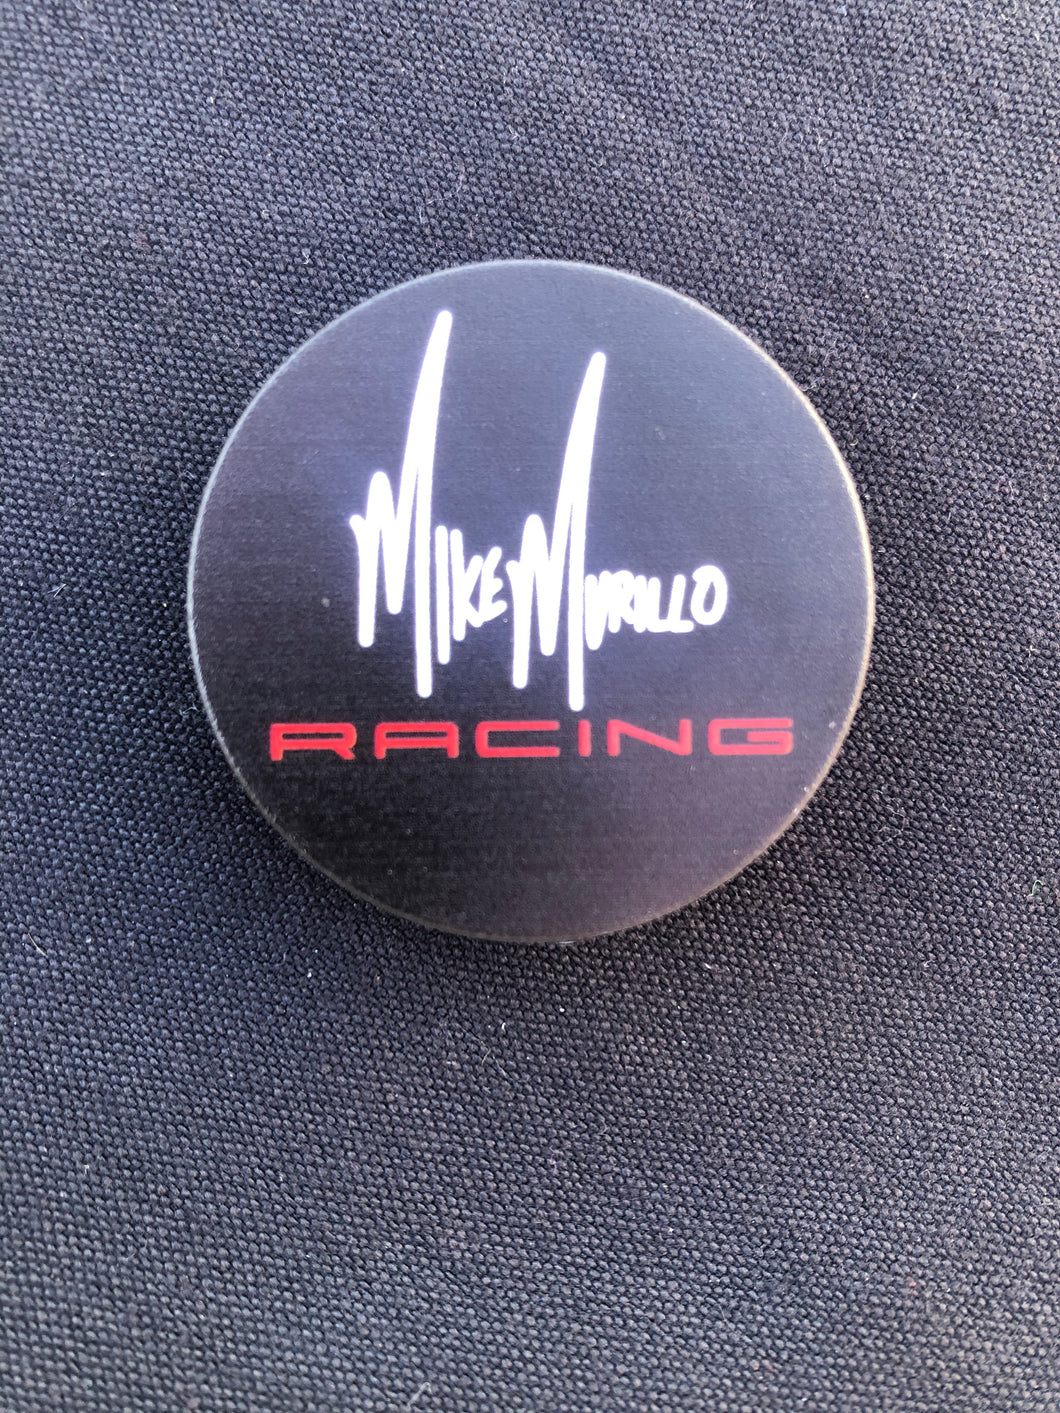 Mike Murillo Racing POP socket